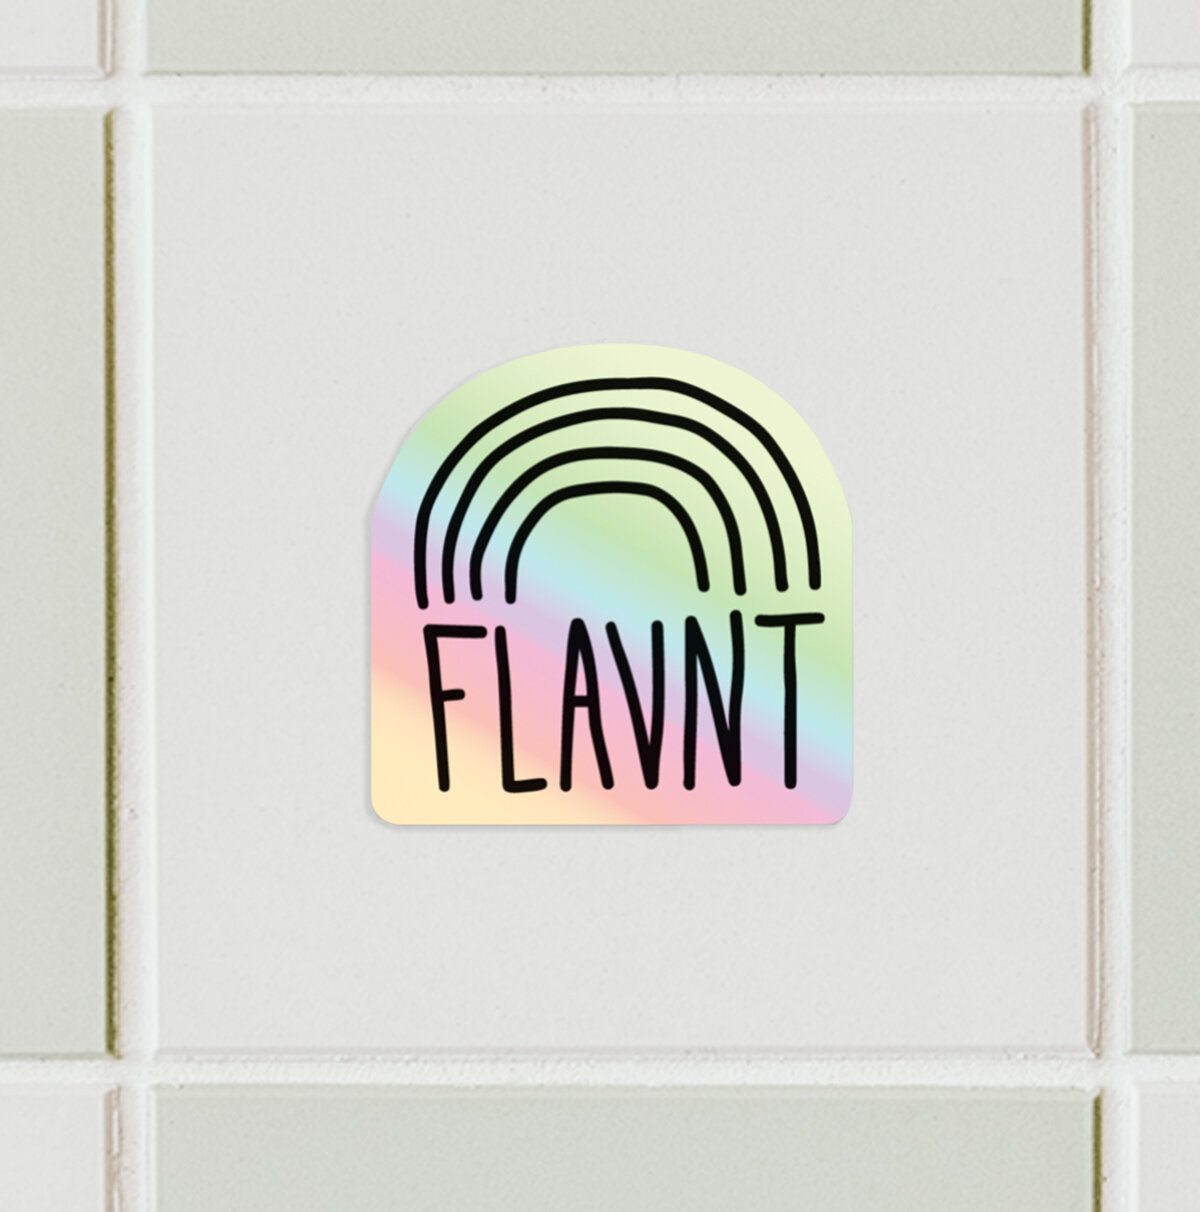 Flavnt Rainbow Holographic Sticker